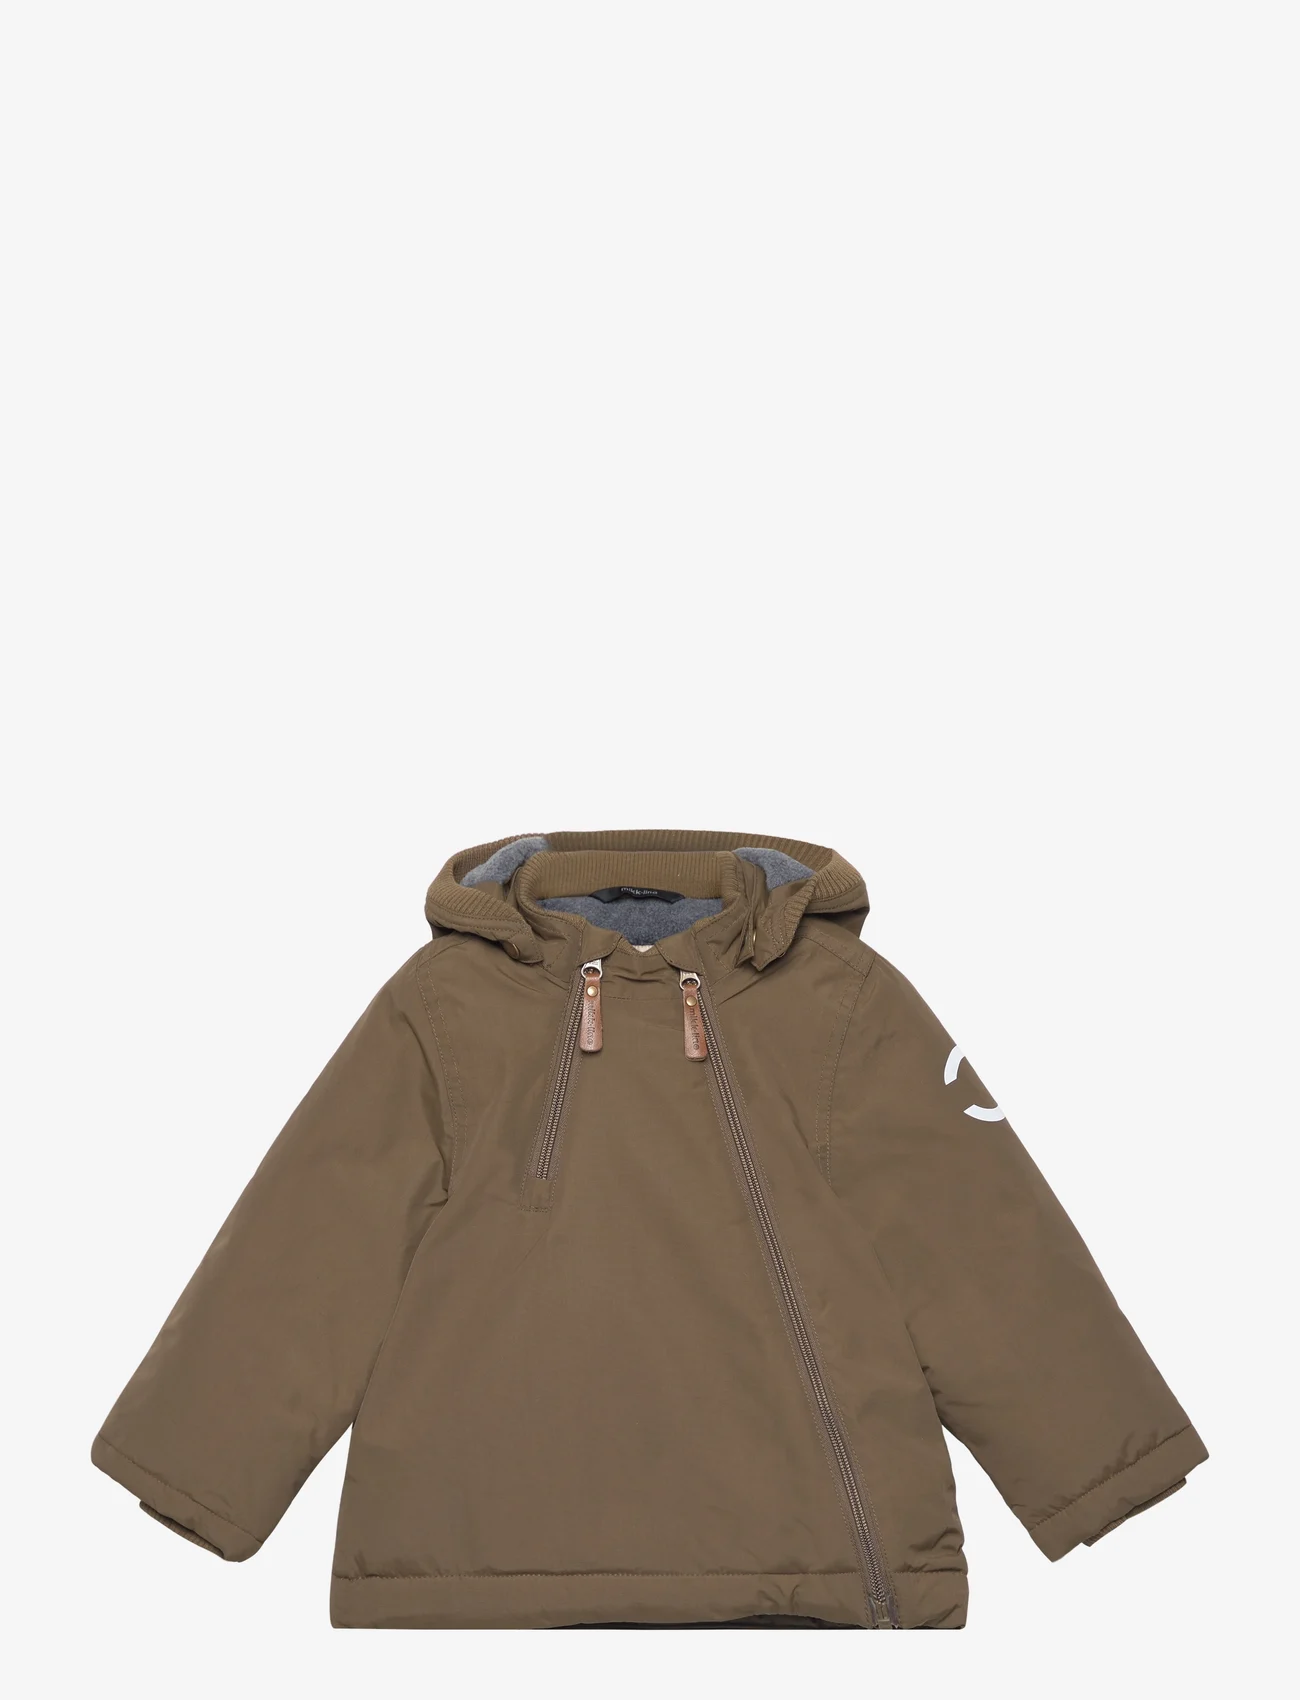 mikk-line - Nylon Baby Jacket - Solid - winter jackets - beech - 0